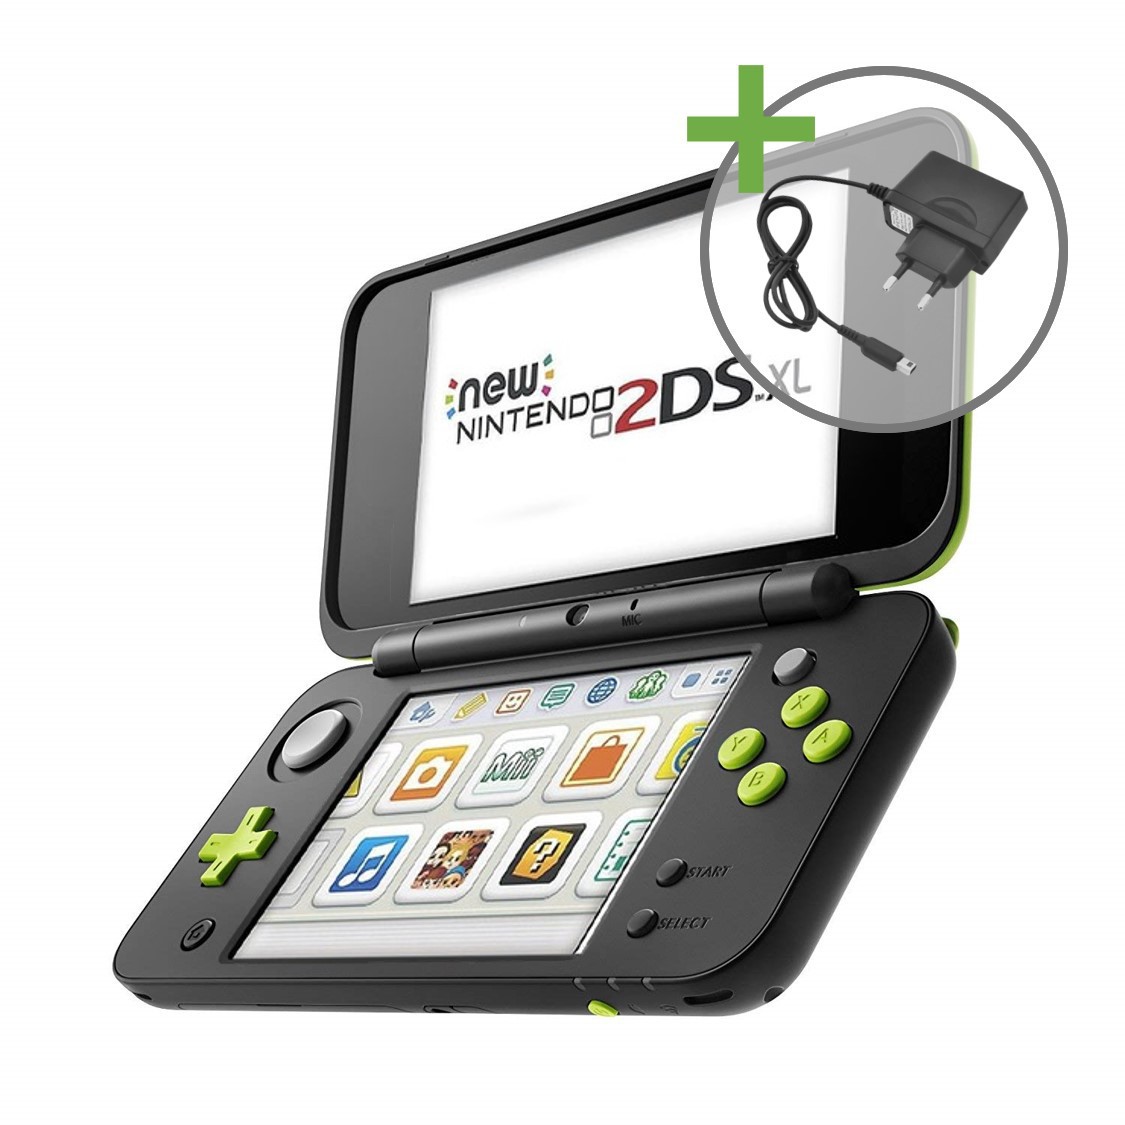 New Nintendo 2DS XL - Black/Lime [Complete] - Nintendo 3DS Hardware - 2